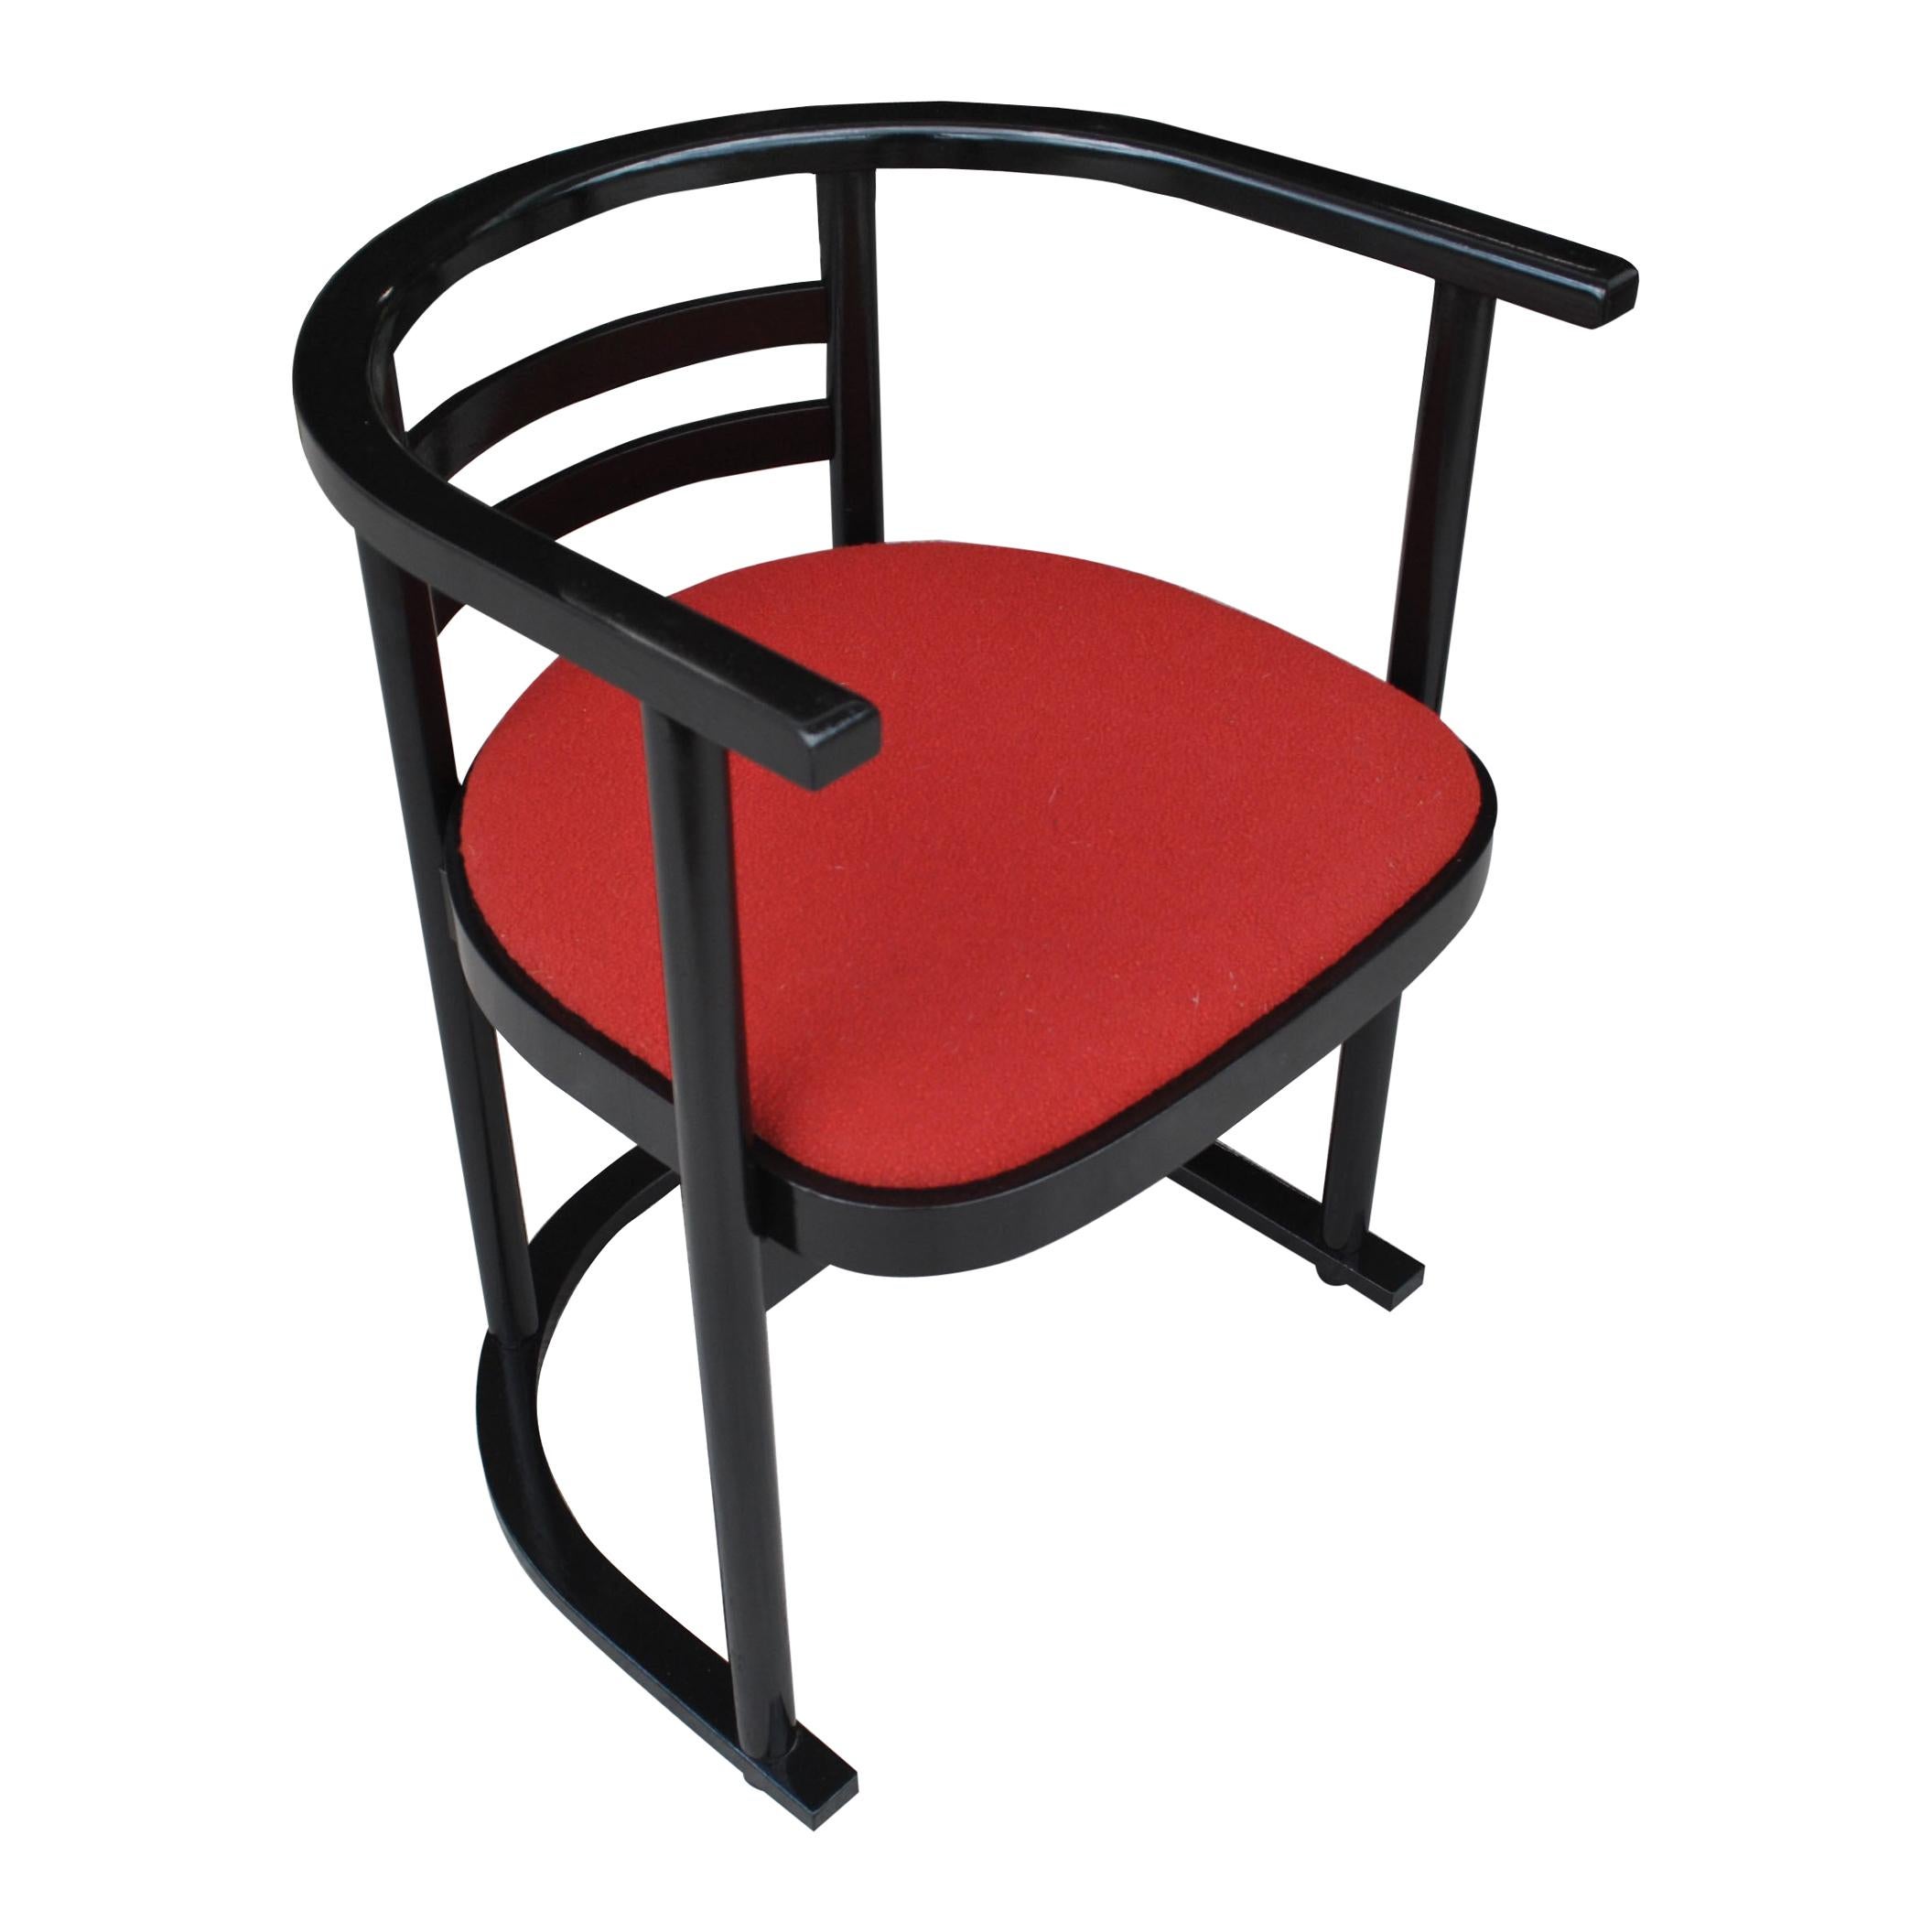 1 Vintage Thonet Josef Hoffmann Style Bauhaus Chair